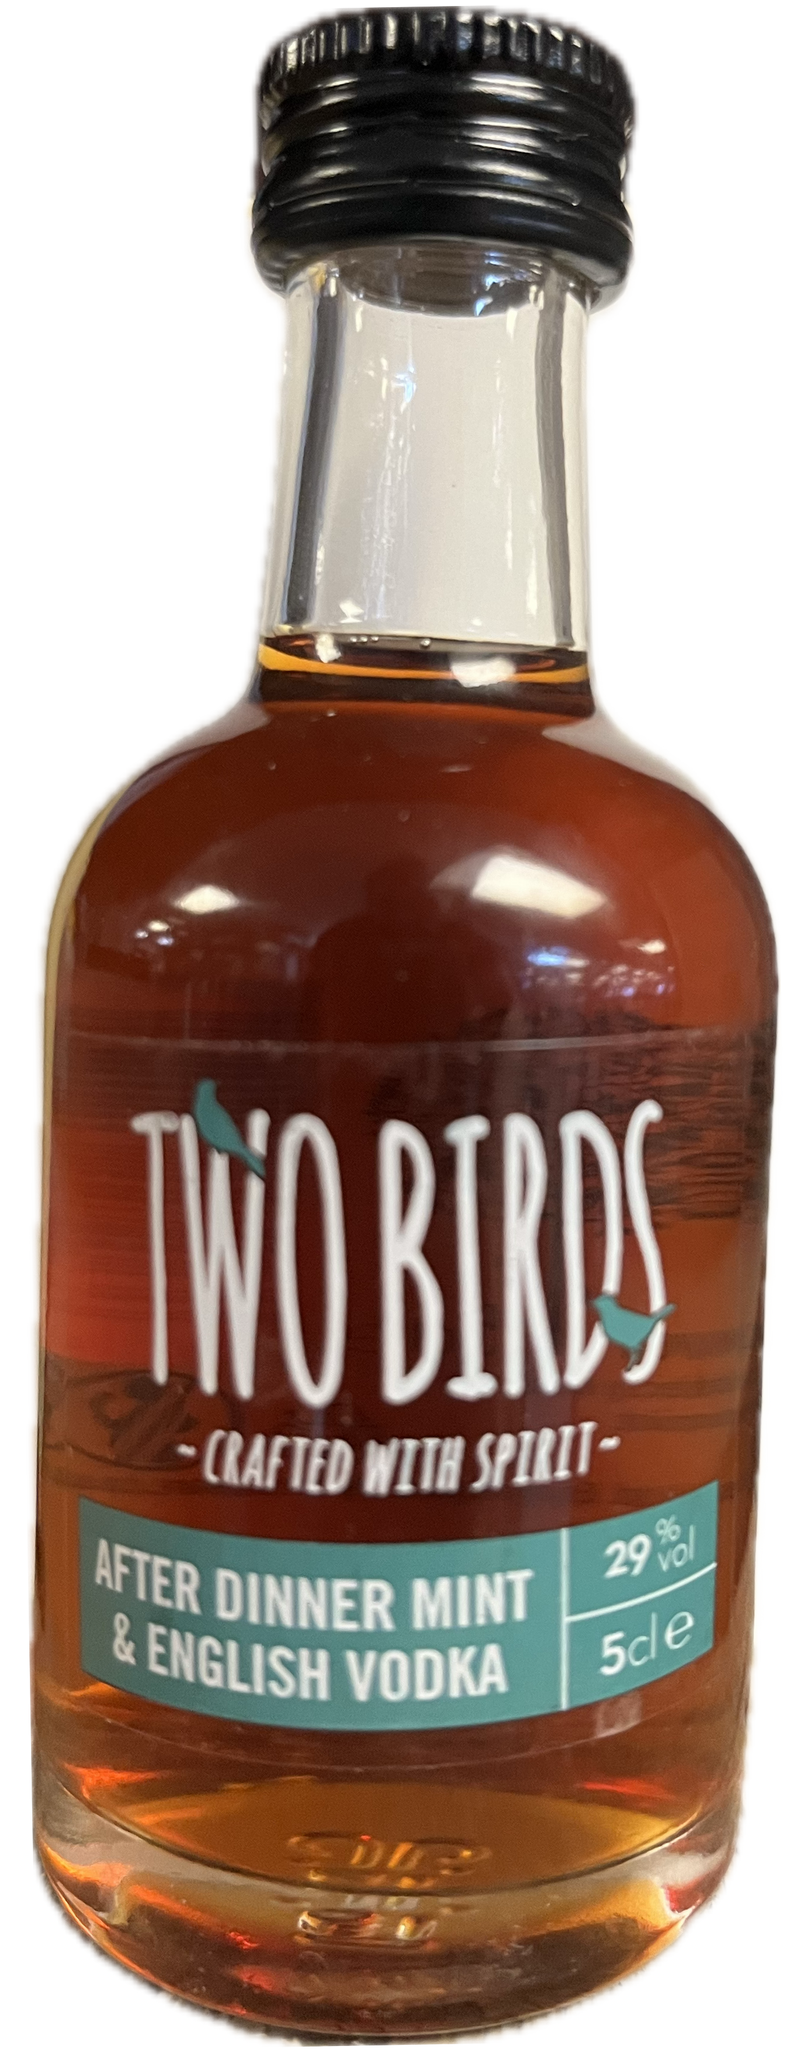 Two Birds After Dinner Mint Vodka 5cl